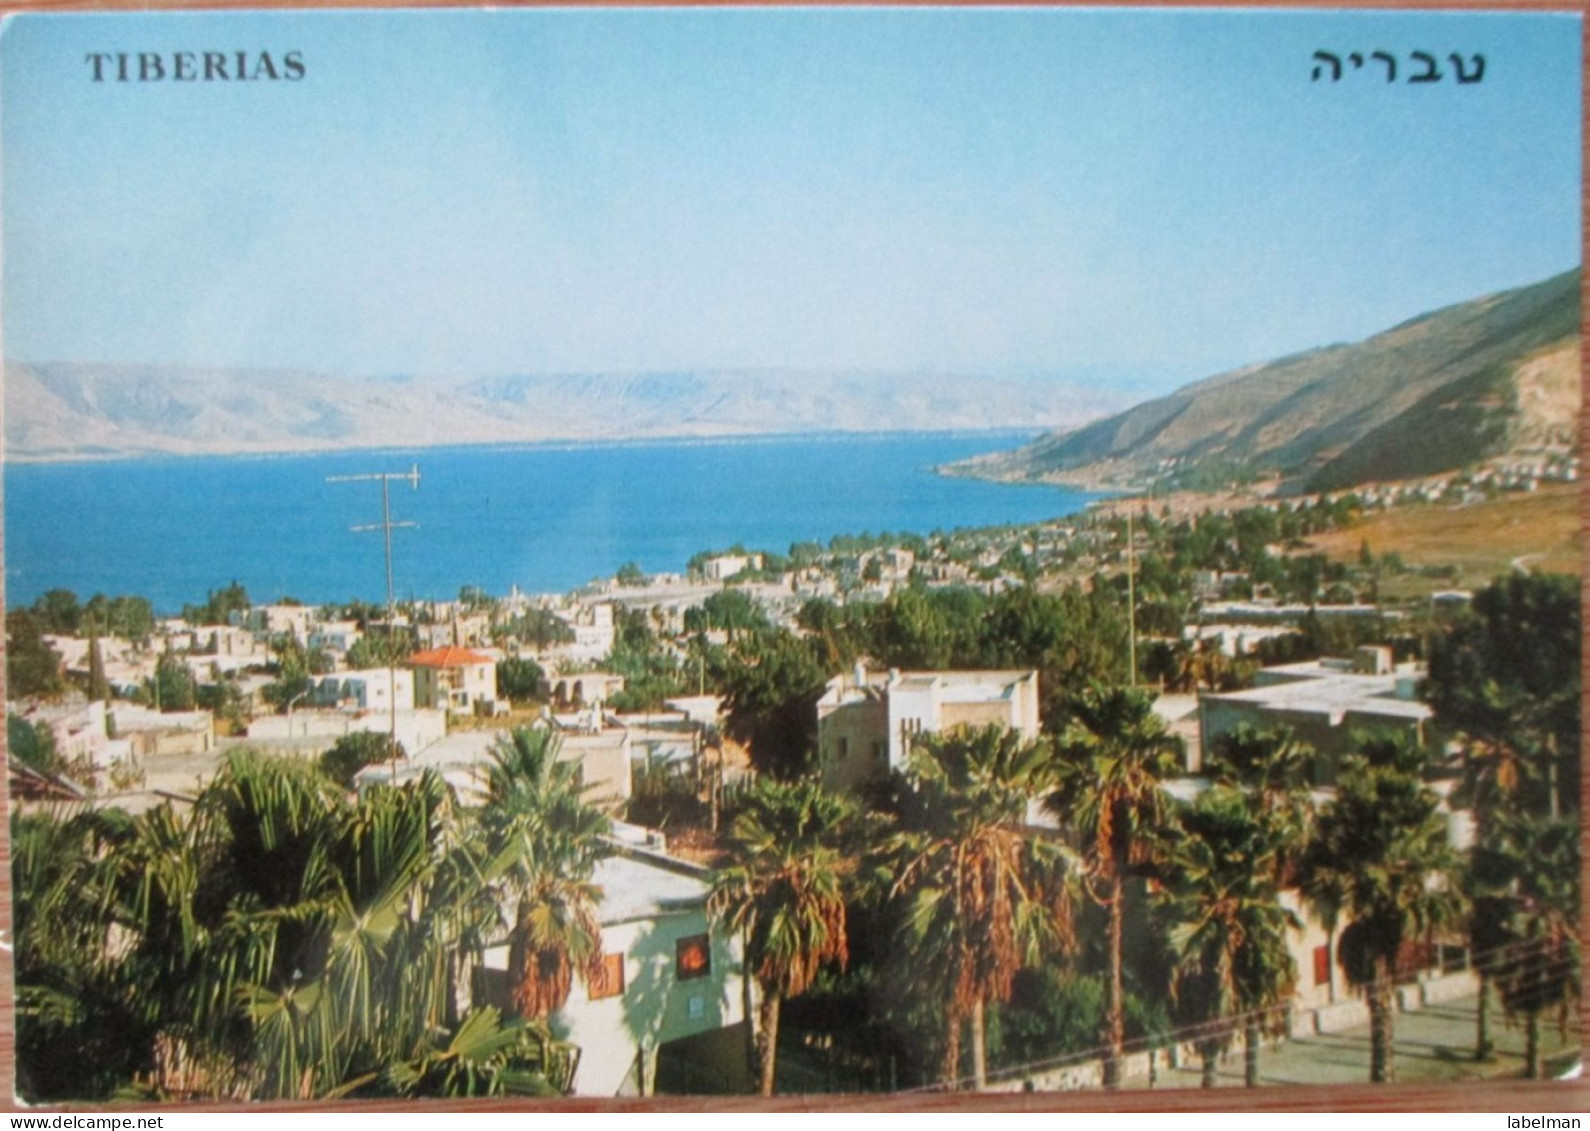 ISRAEL TIBERIAS KINNERET LAKE GALILEE SEA GOLAN MOUNTAIN CARTE POSTALE CARTOLINA ANSICHTSKARTE POSTCARD POSTKARTE CARD - Israël